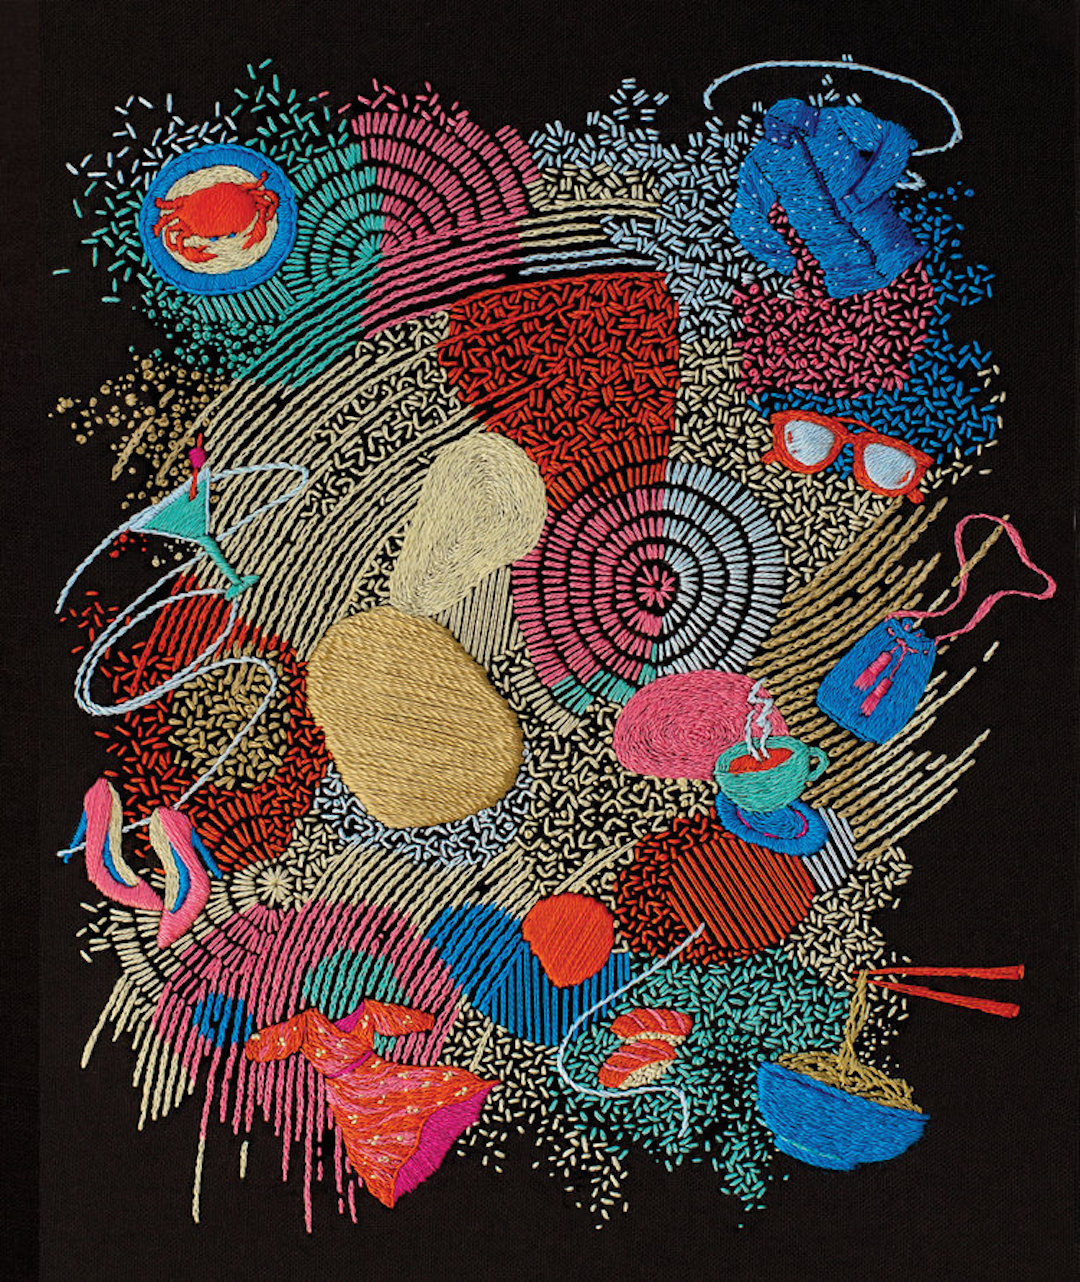 Hand embroidery by Maricor/Maricar